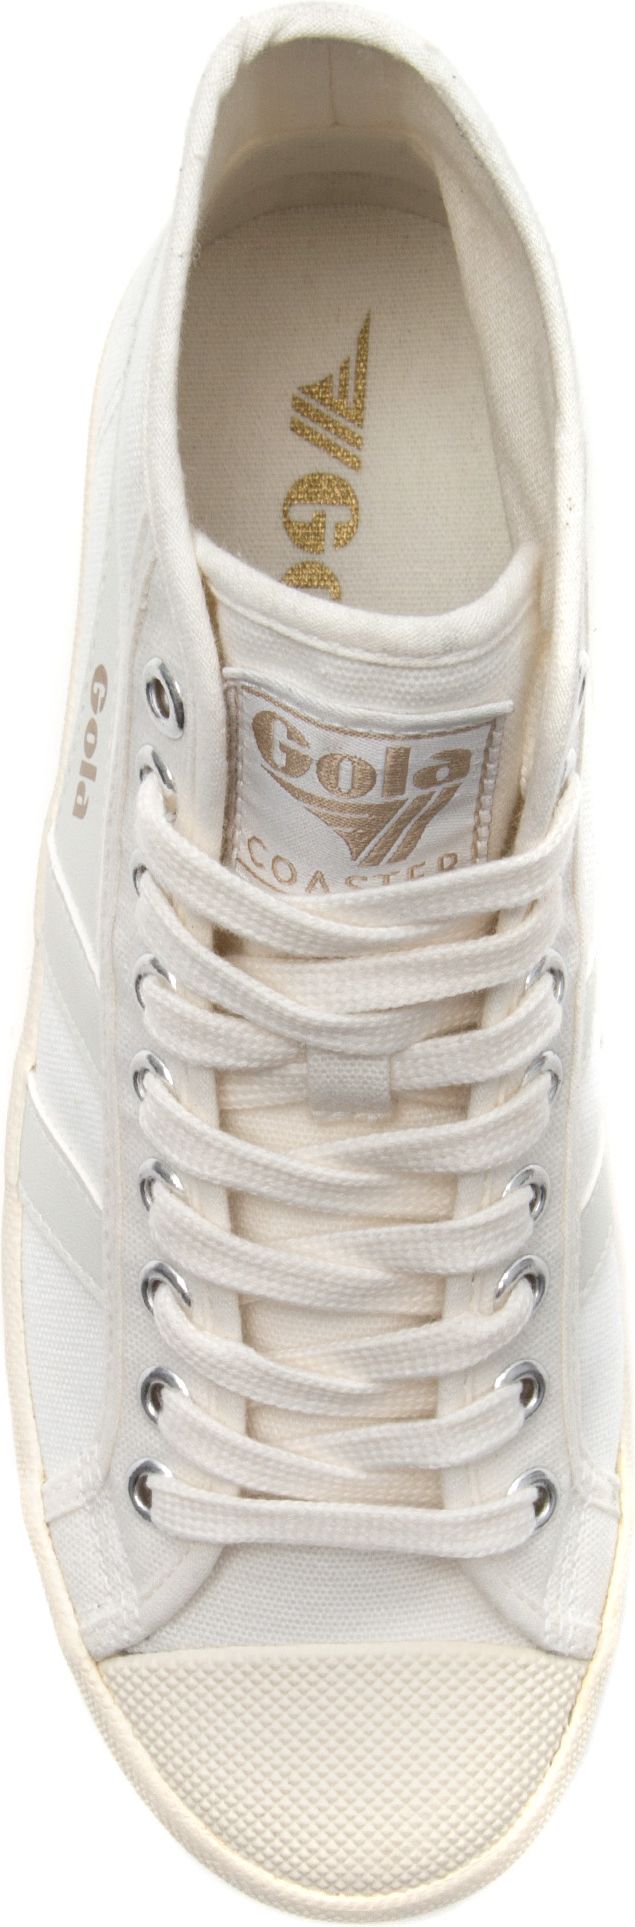 Gola Shoes Coaster High Off White